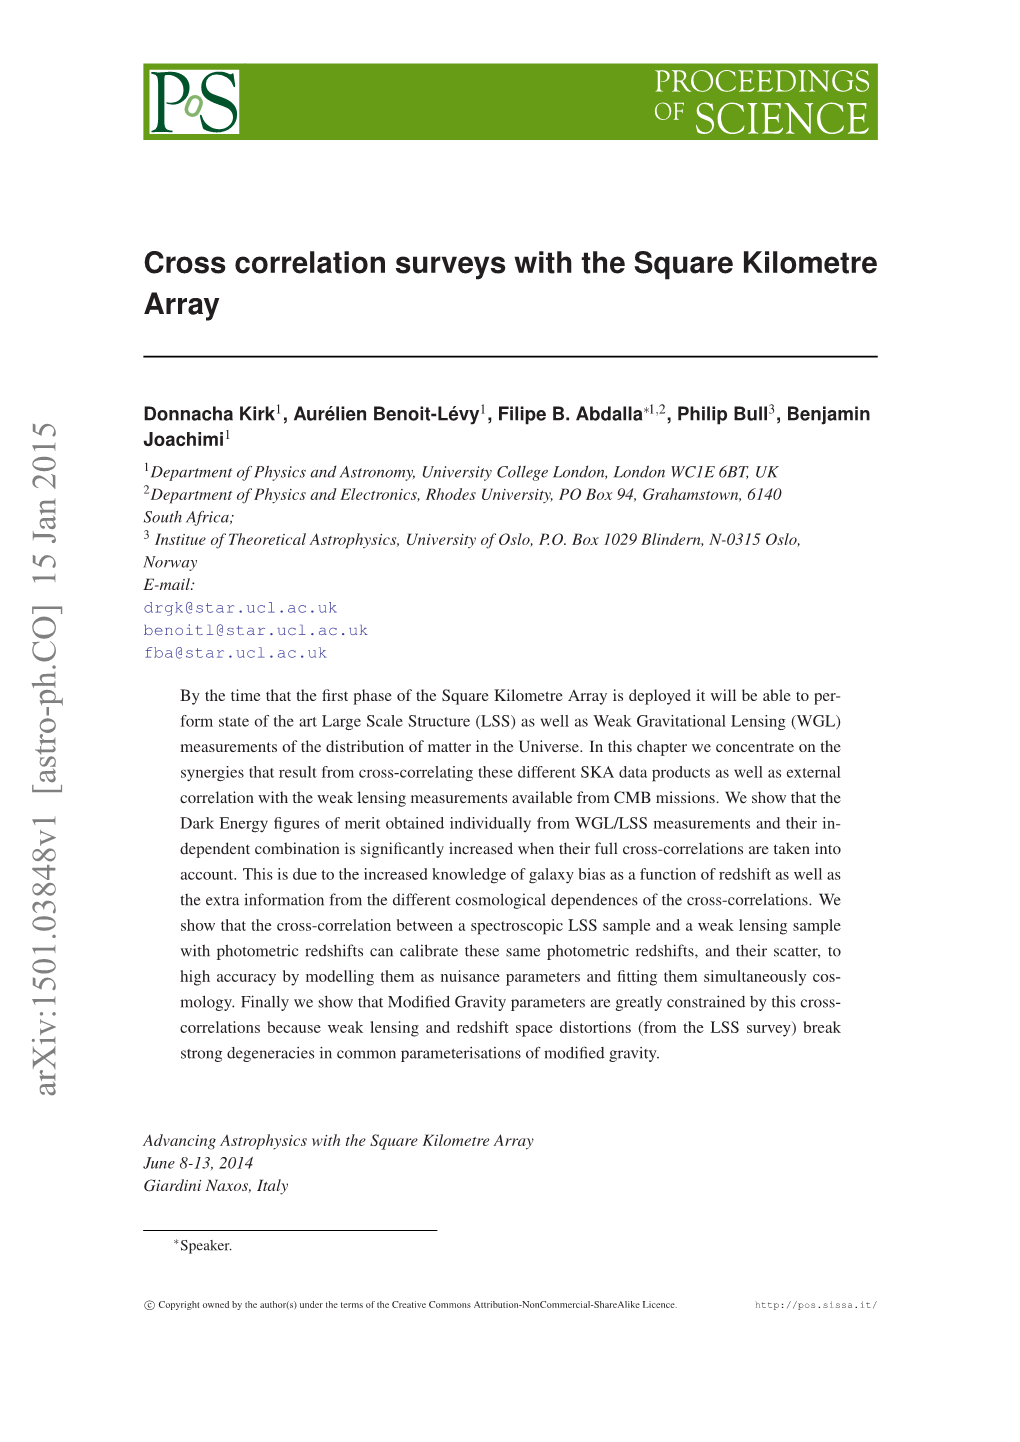 Cross Correlation Surveys with the Square Kilometre Array